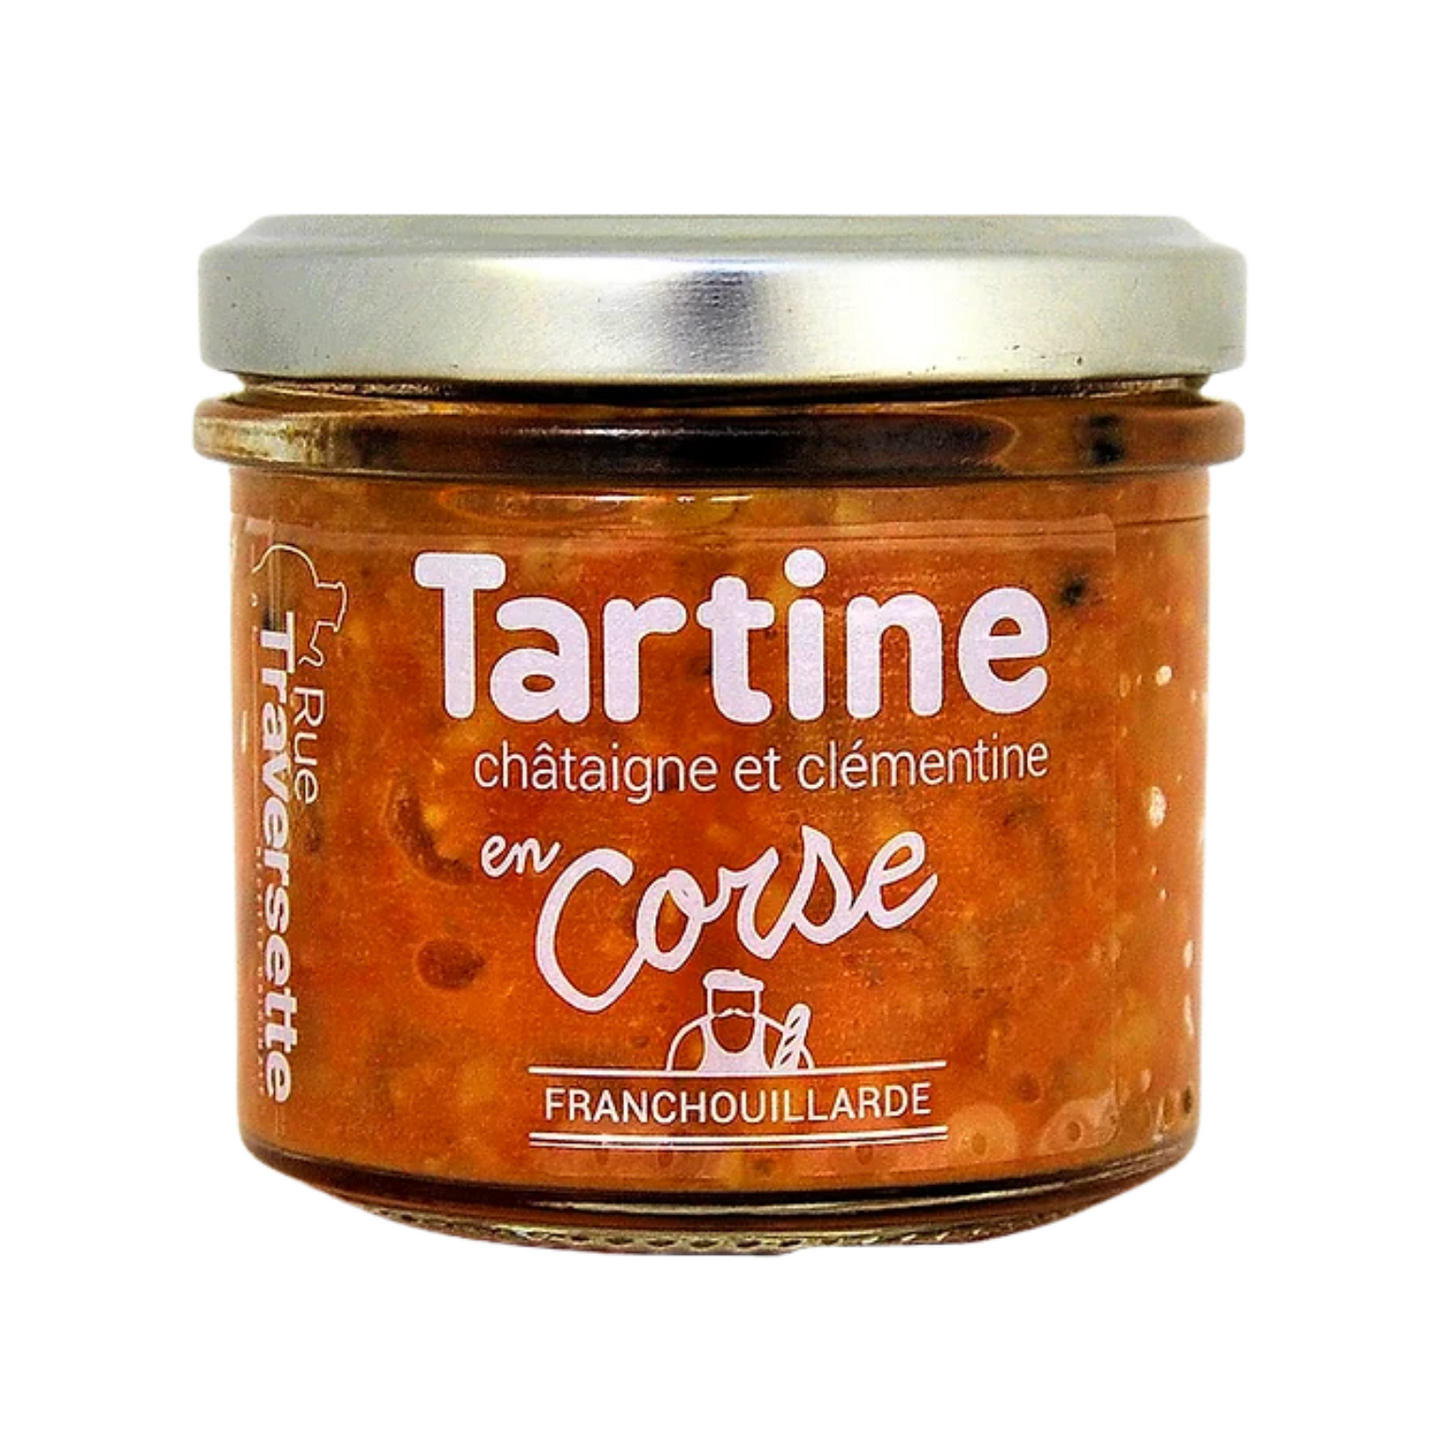 Tartine en Corse